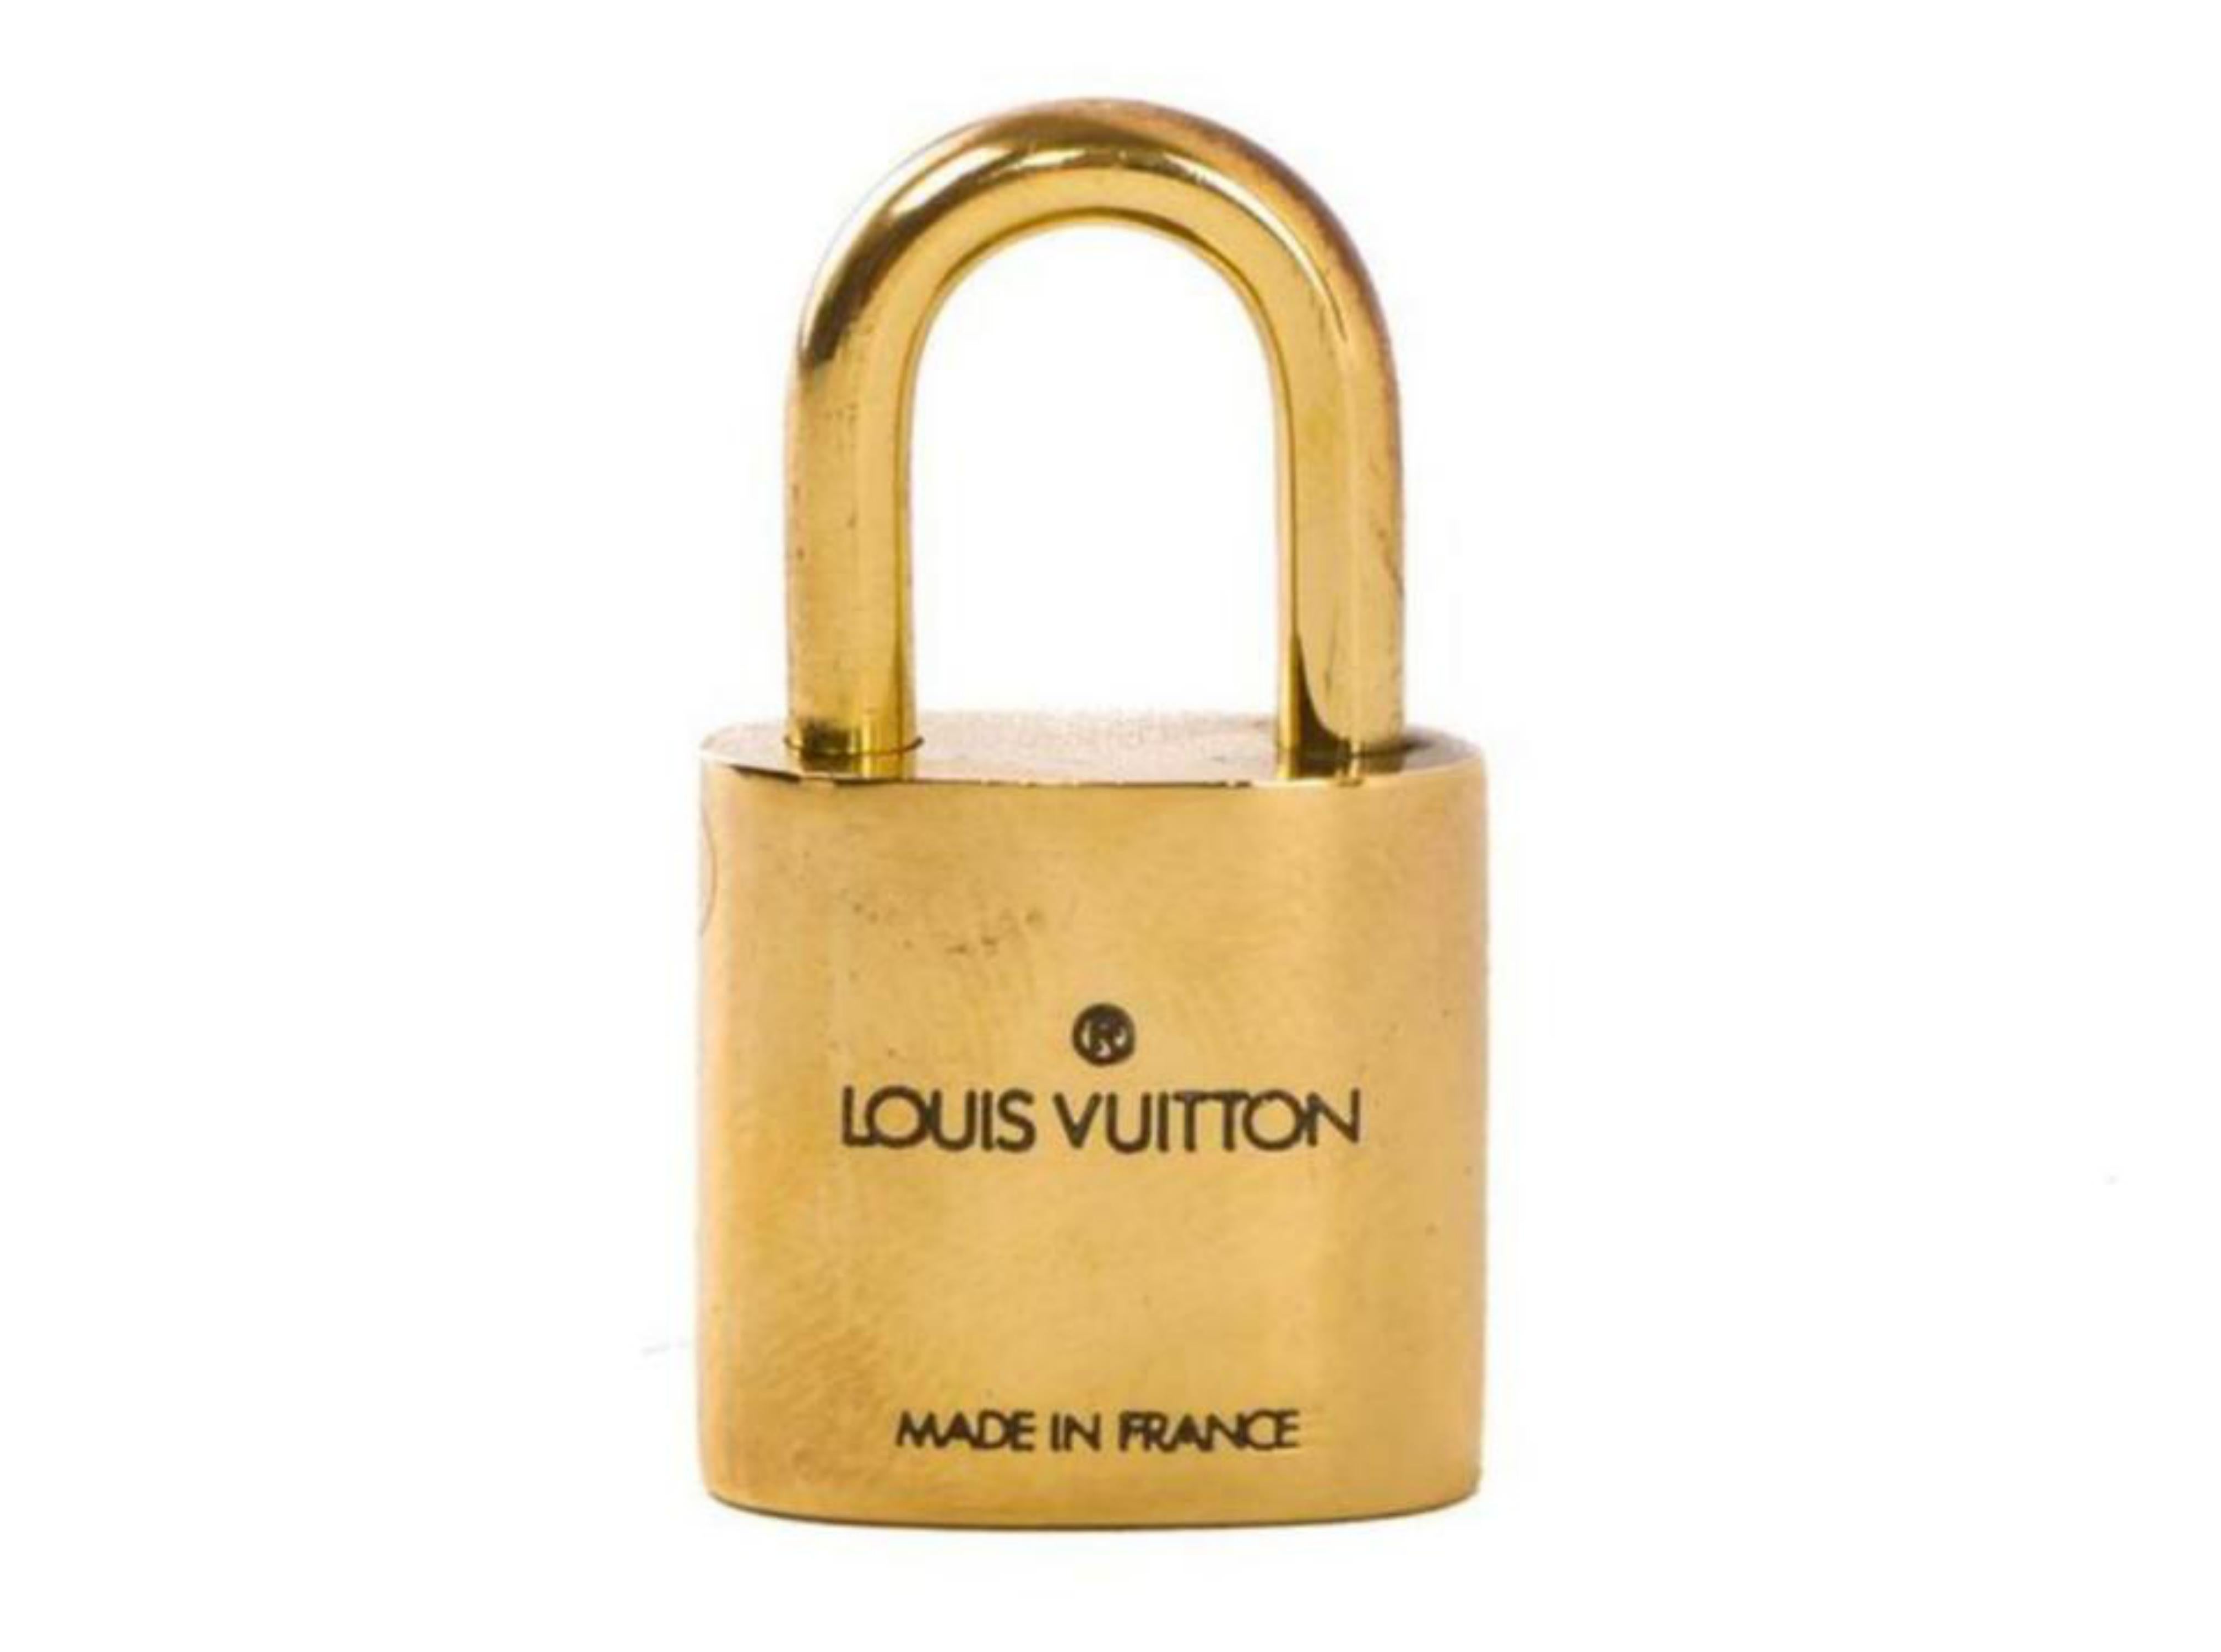 Louis Vuitton Gold Single Key Lock Pad Lock and Key 867731 2